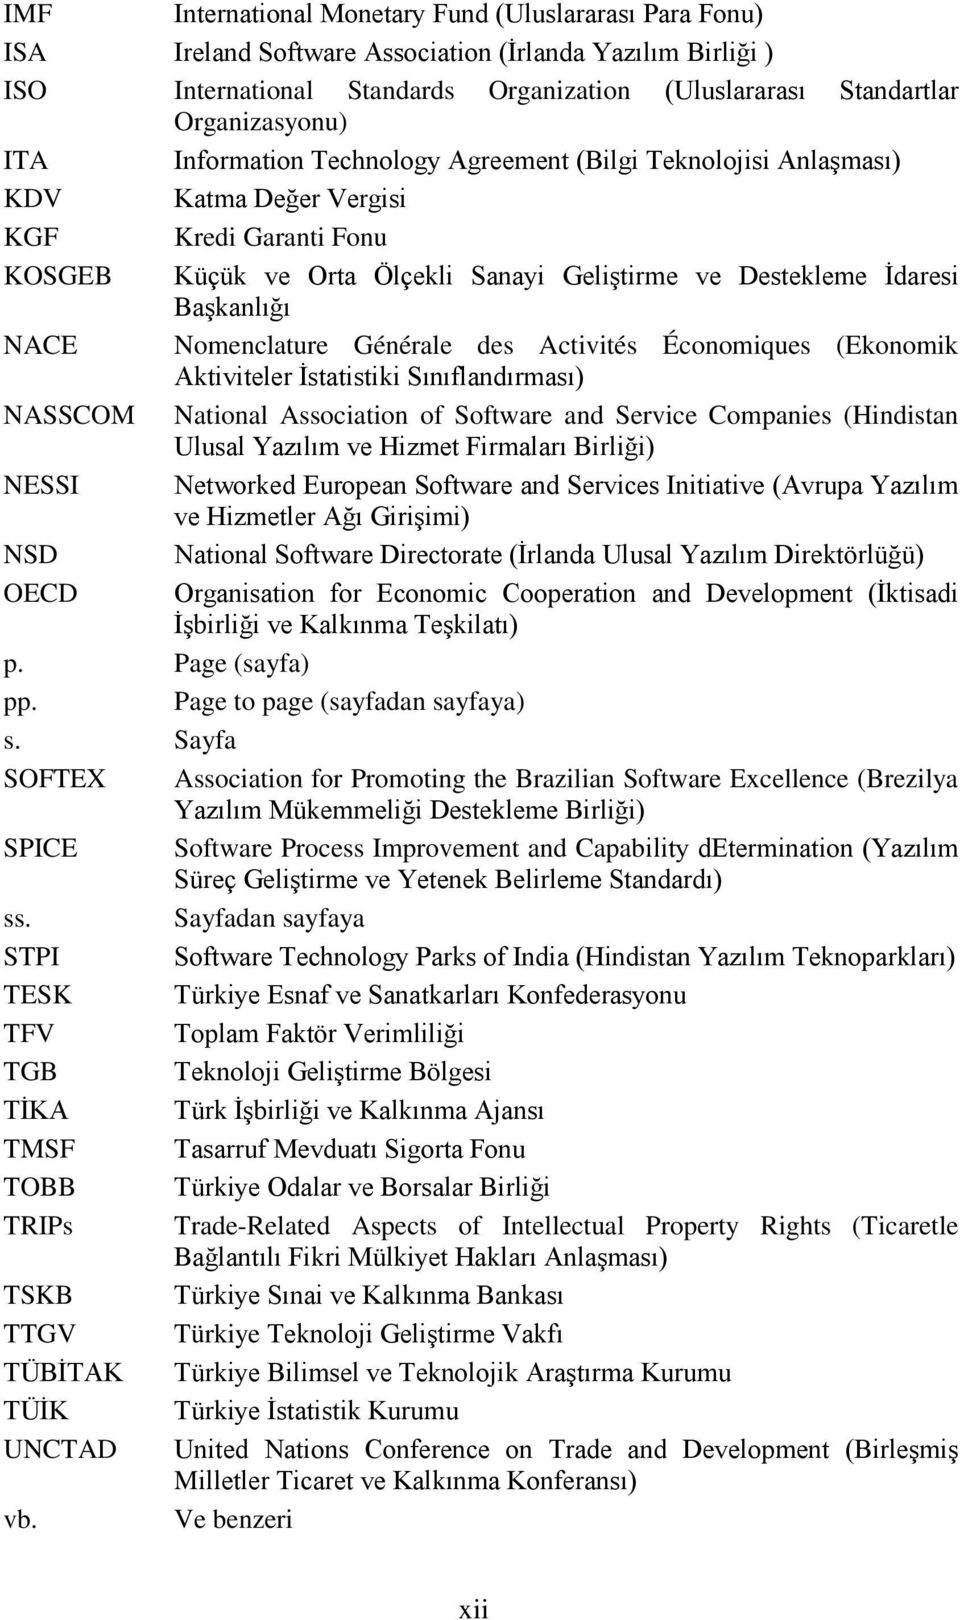 Nomenclature Générale des Activités Économiques (Ekonomik Aktiviteler Ġstatistiki Sınıflandırması) NASSCOM National Association of Software and Service Companies (Hindistan Ulusal Yazılım ve Hizmet